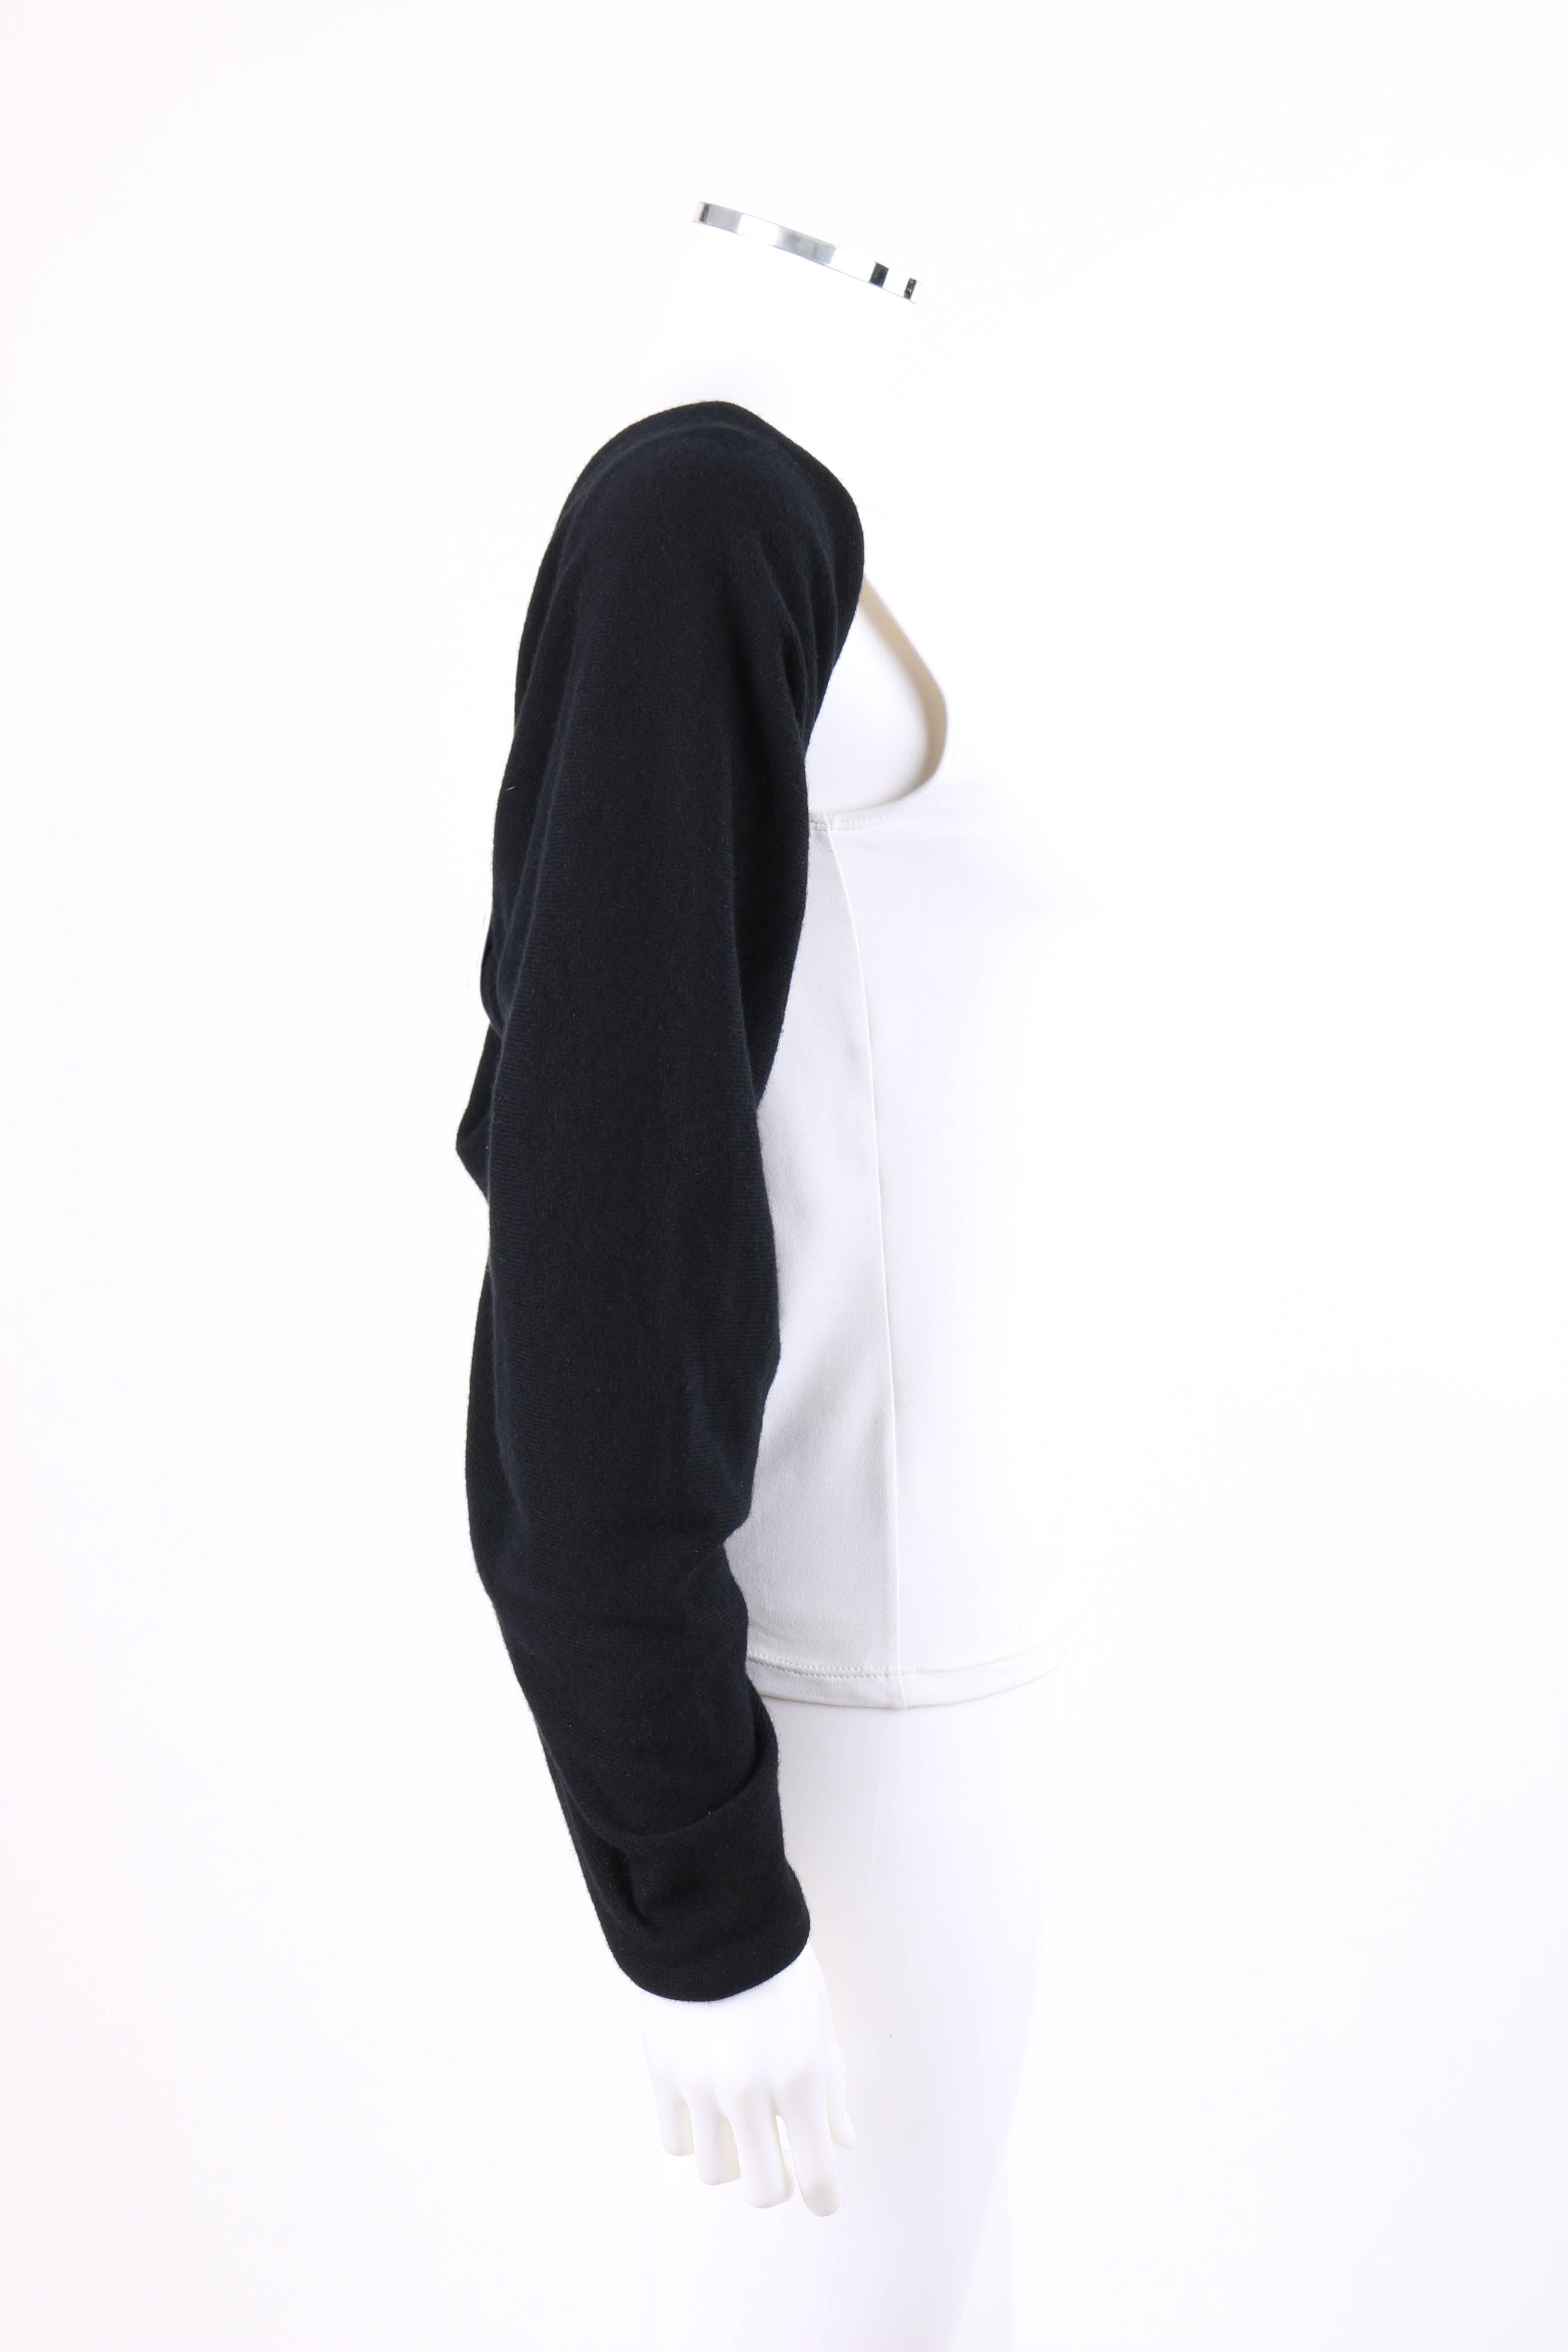 VALENTINO S/S 2006 Black Cashmere Knit Bow Shrug NWT 1